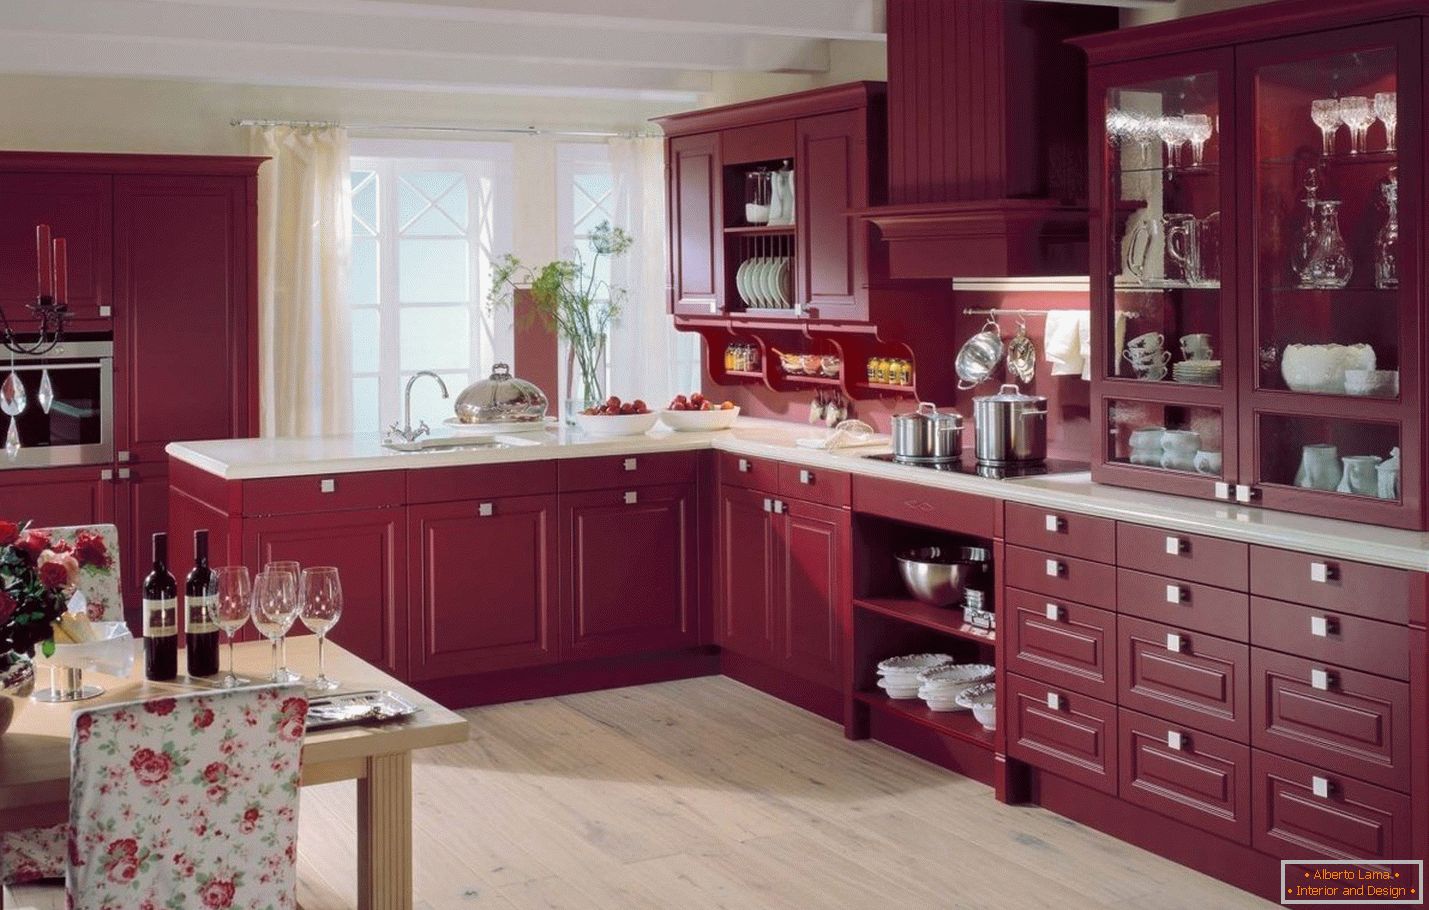 Kitchen furniture in burgundy color